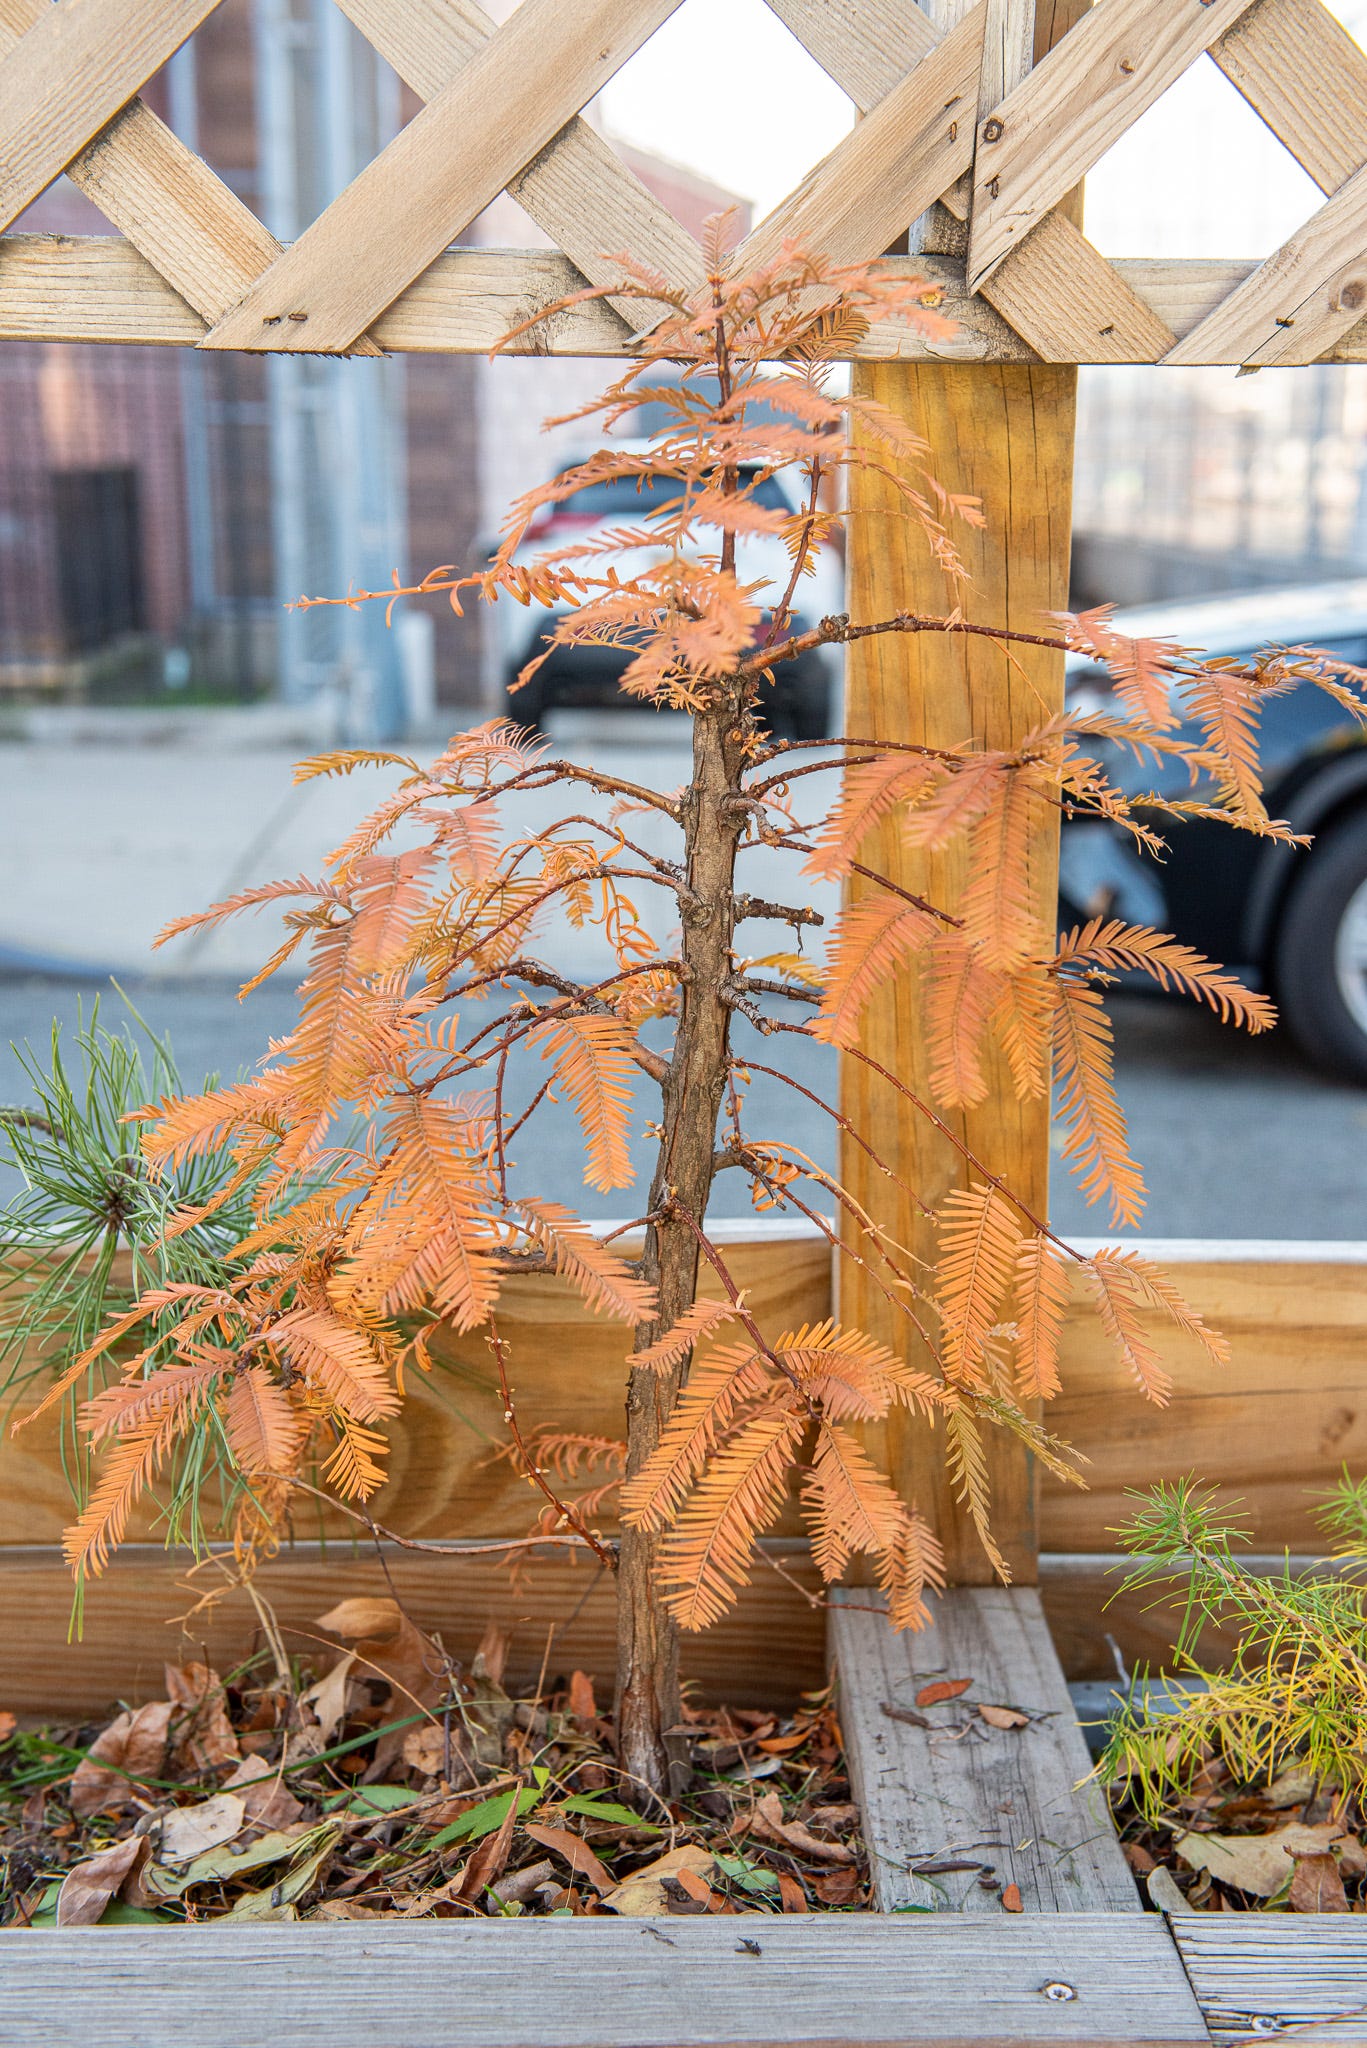 ID: Dawn redwood bonsai showing fall colors